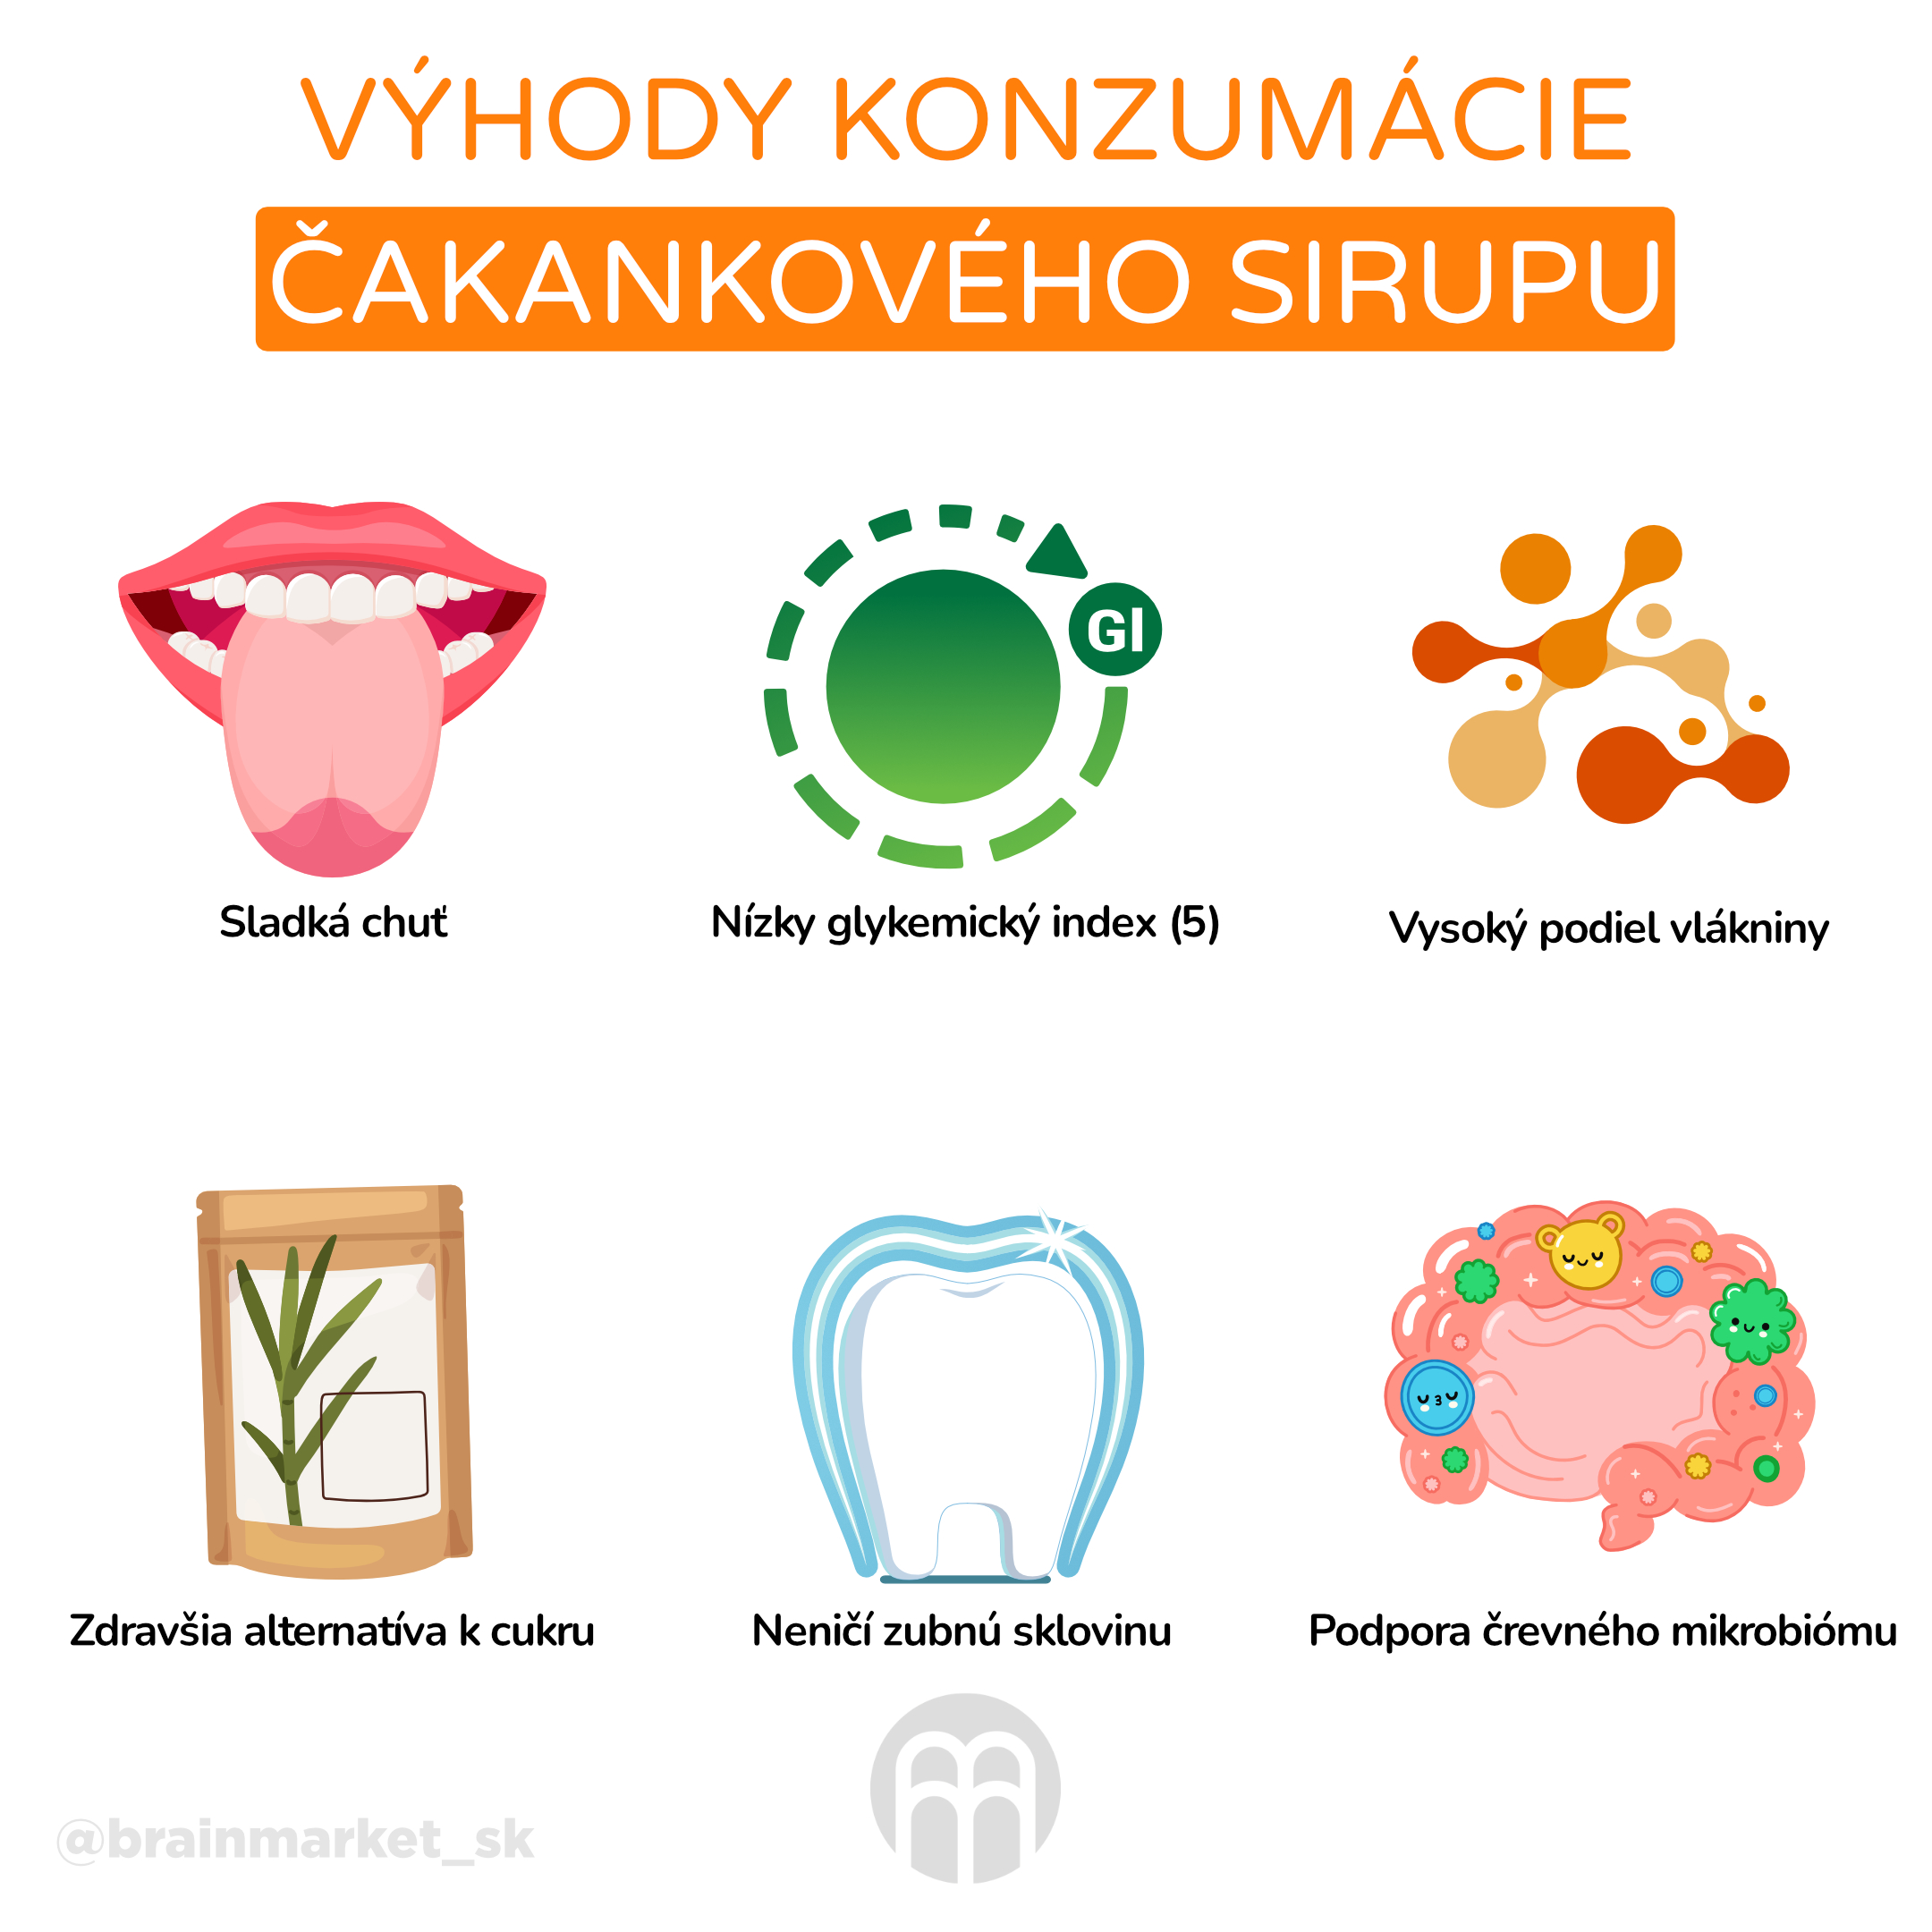 vyhody konzumace cekankoveho cukru_infografika_cz